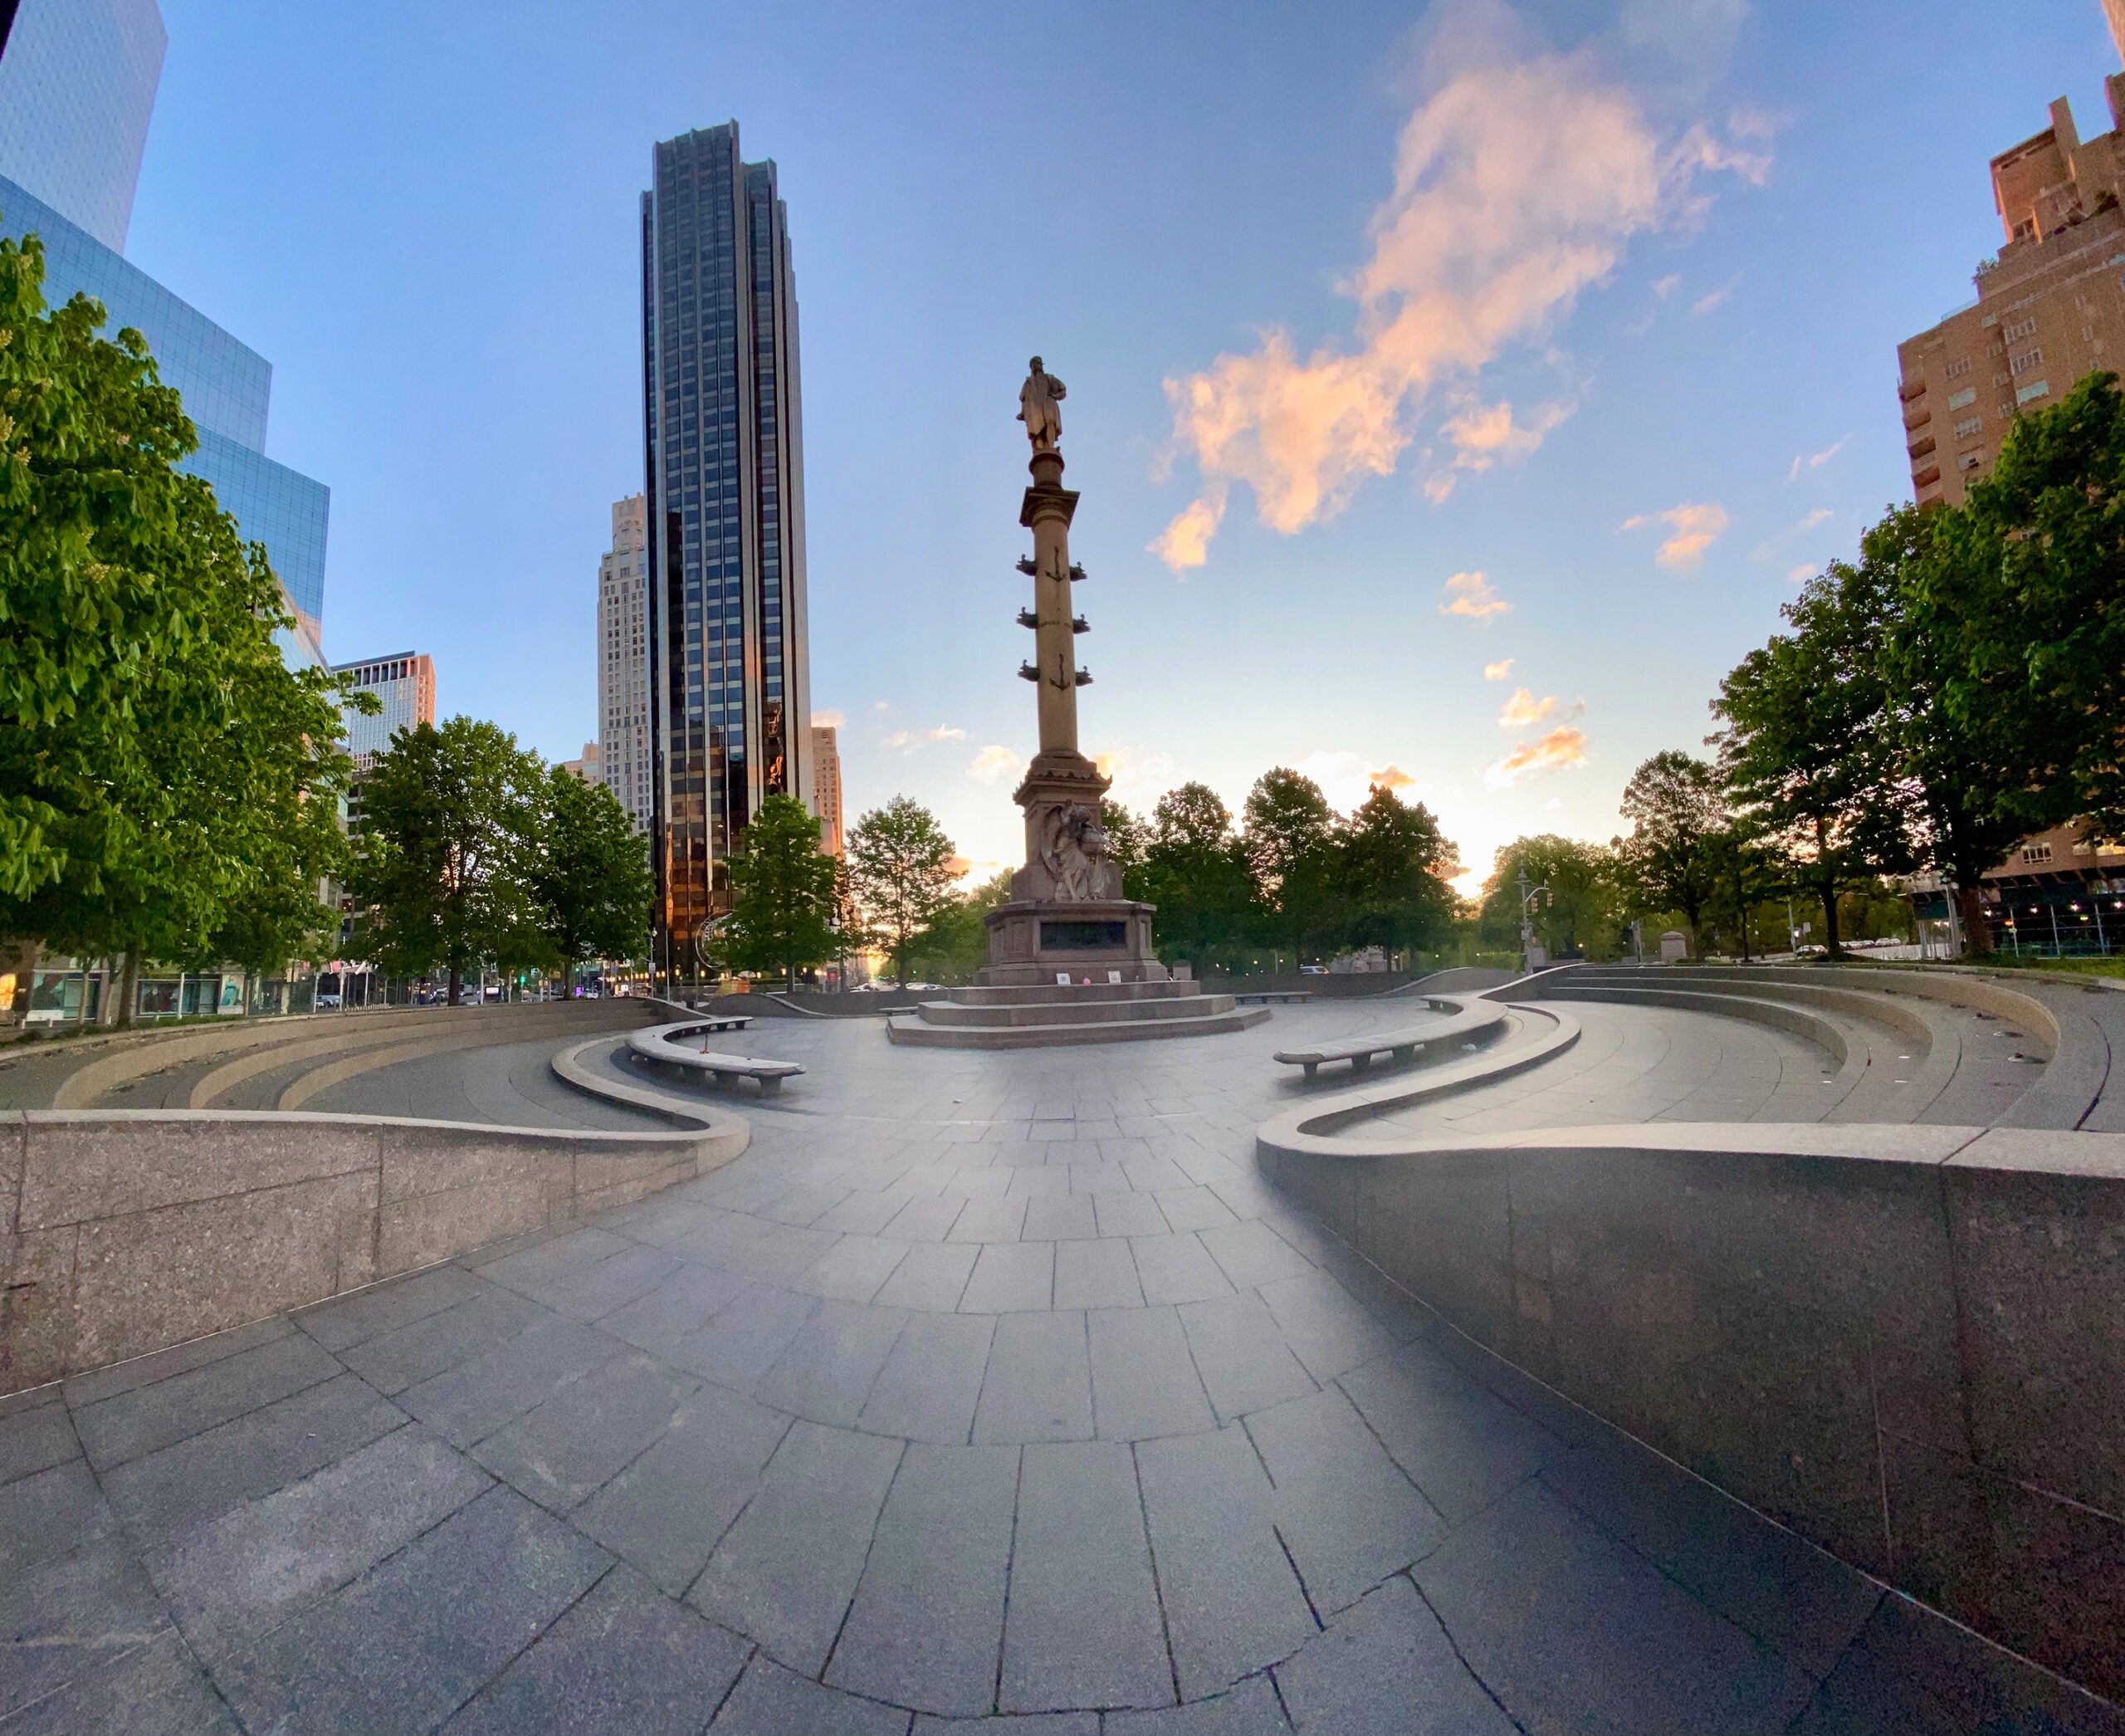 Columbus Monument. May 9, 2020, 5:58 am.